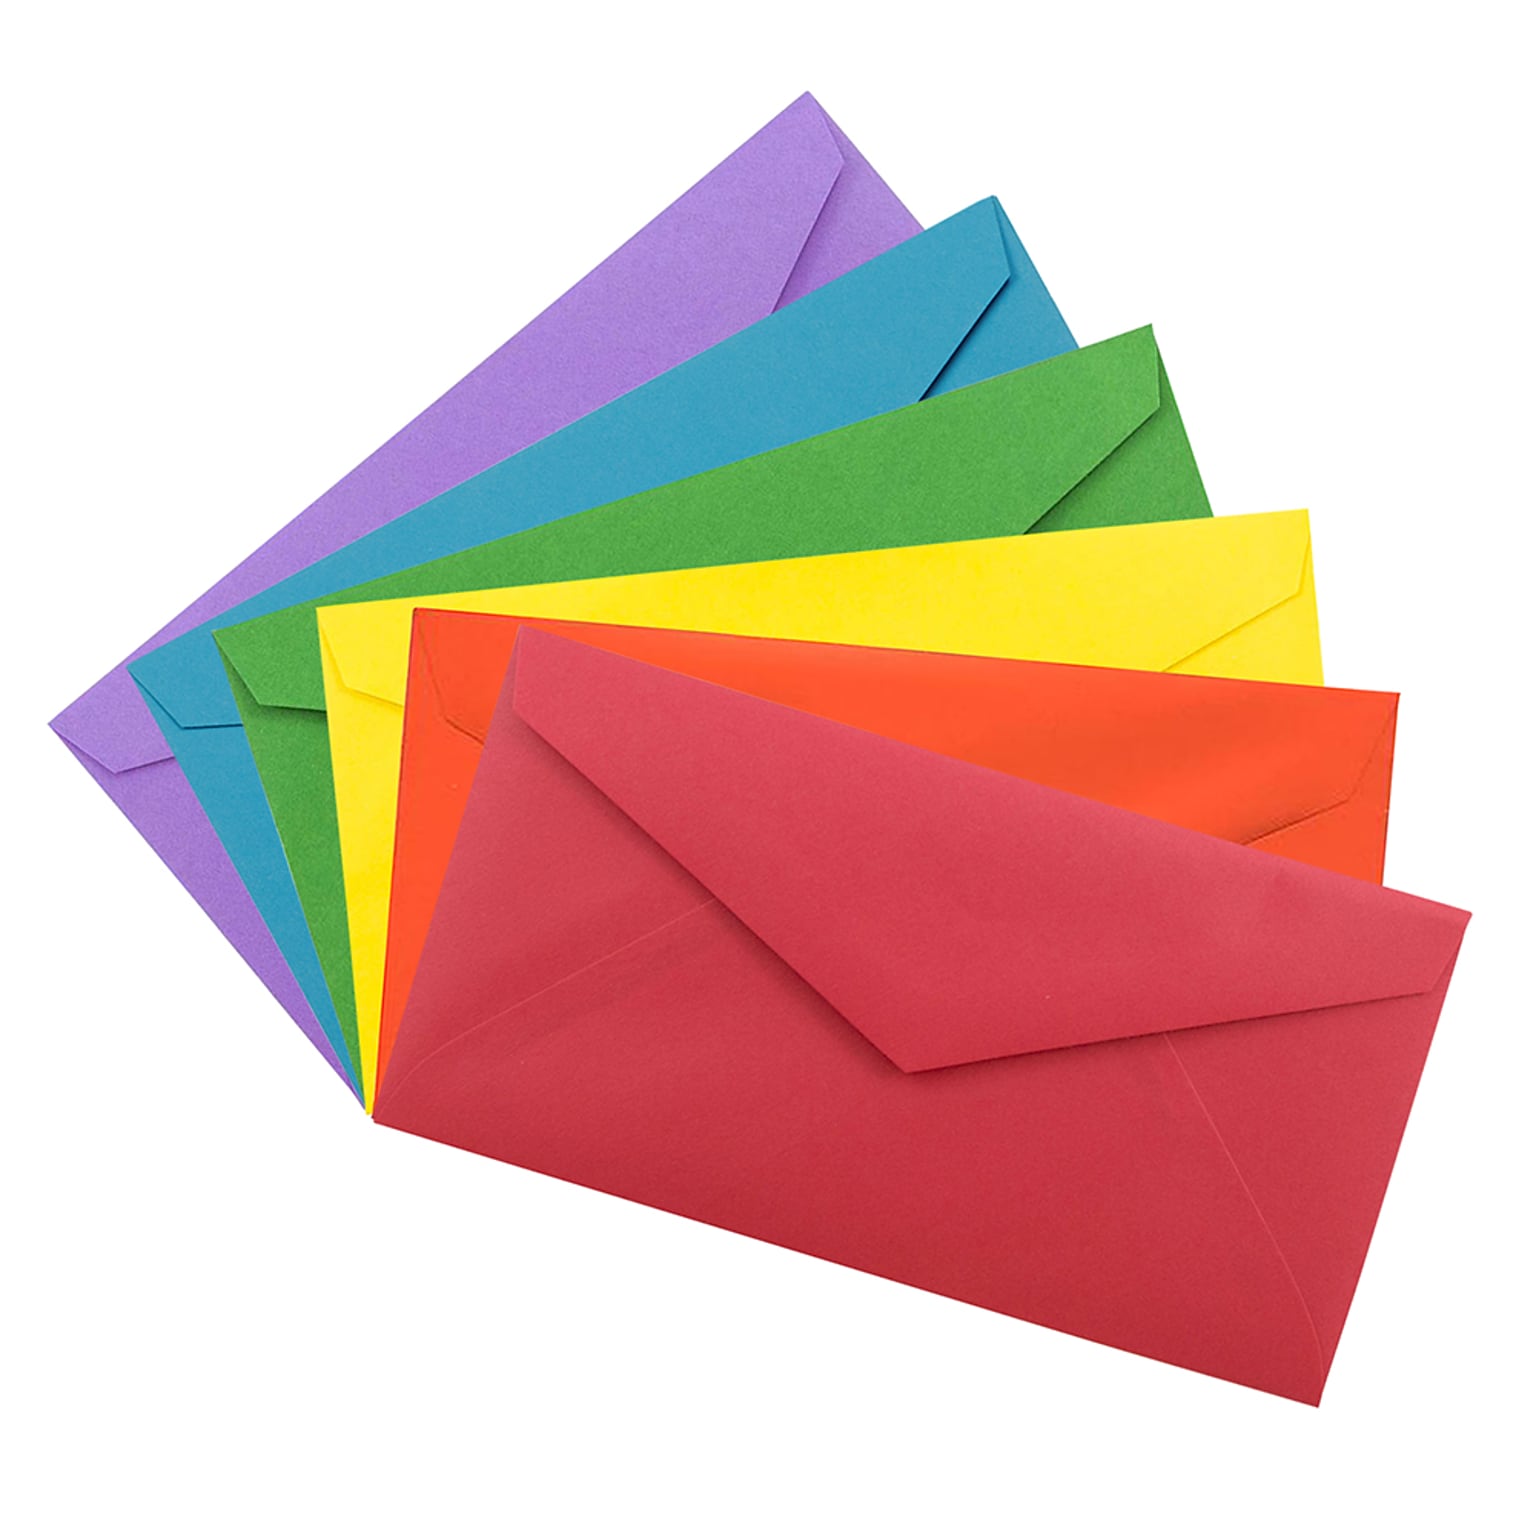 JAM Paper Monarch Invitation Envelope, 3 7/8 x 7 1/2, Brite Hue Assorted, 150/Pack (3409BRORGPY)